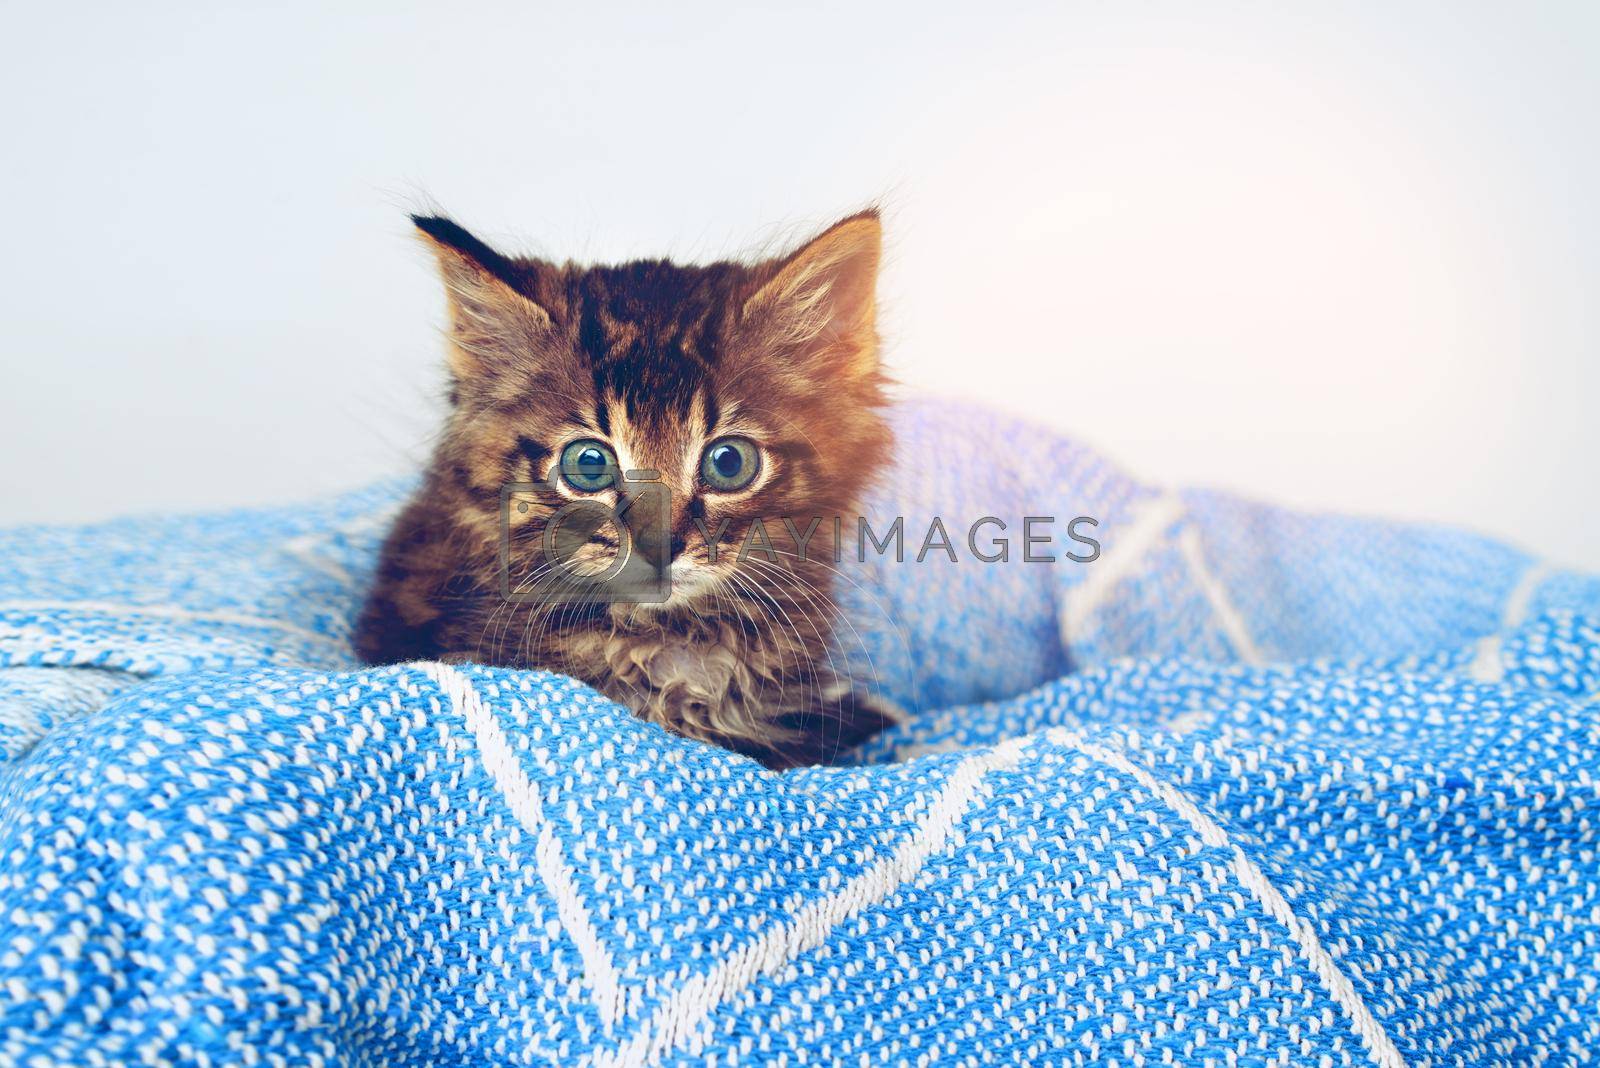 Studio shot of an adorable tabby kitten sitting on a soft blanket.